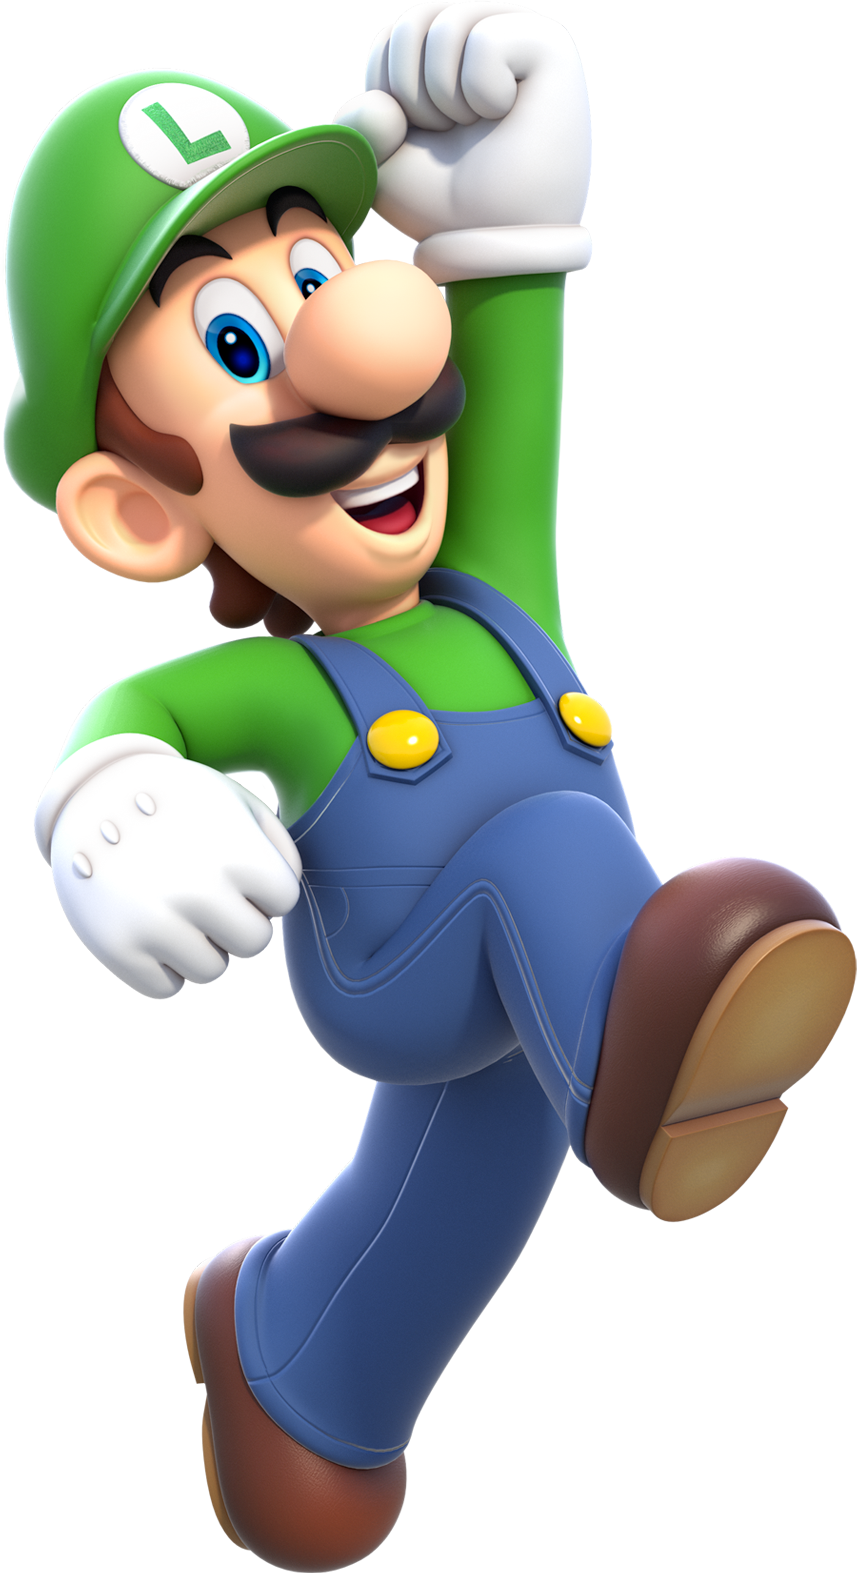 Toy Superstar Saga Character Fictional Mario Luigi PNG Image